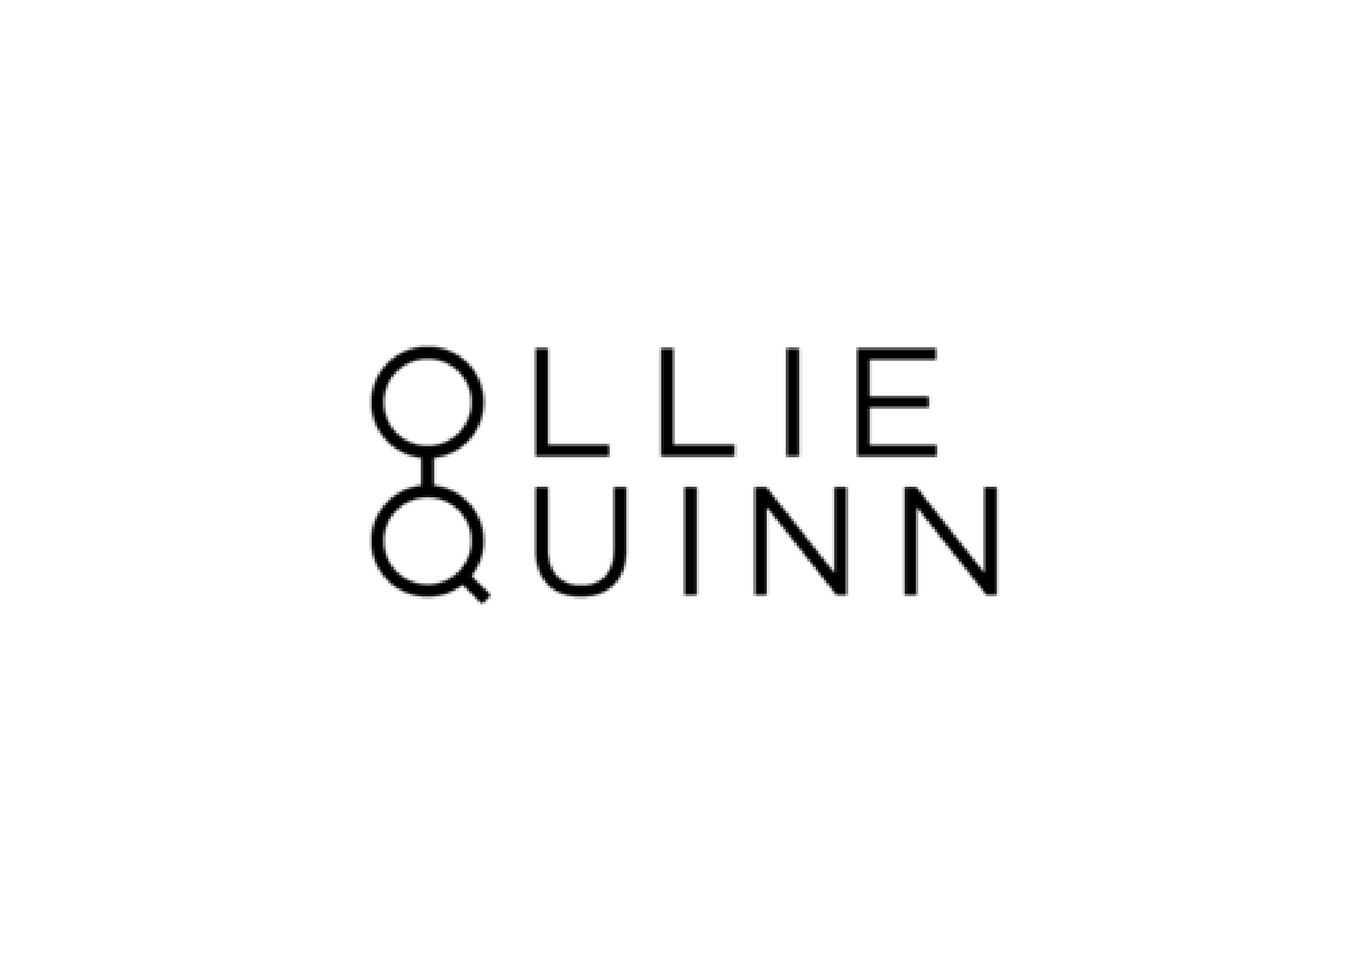 Reddit.com Logo - Did Ollie Quinn (international glasses company) rip off Golem Coin's